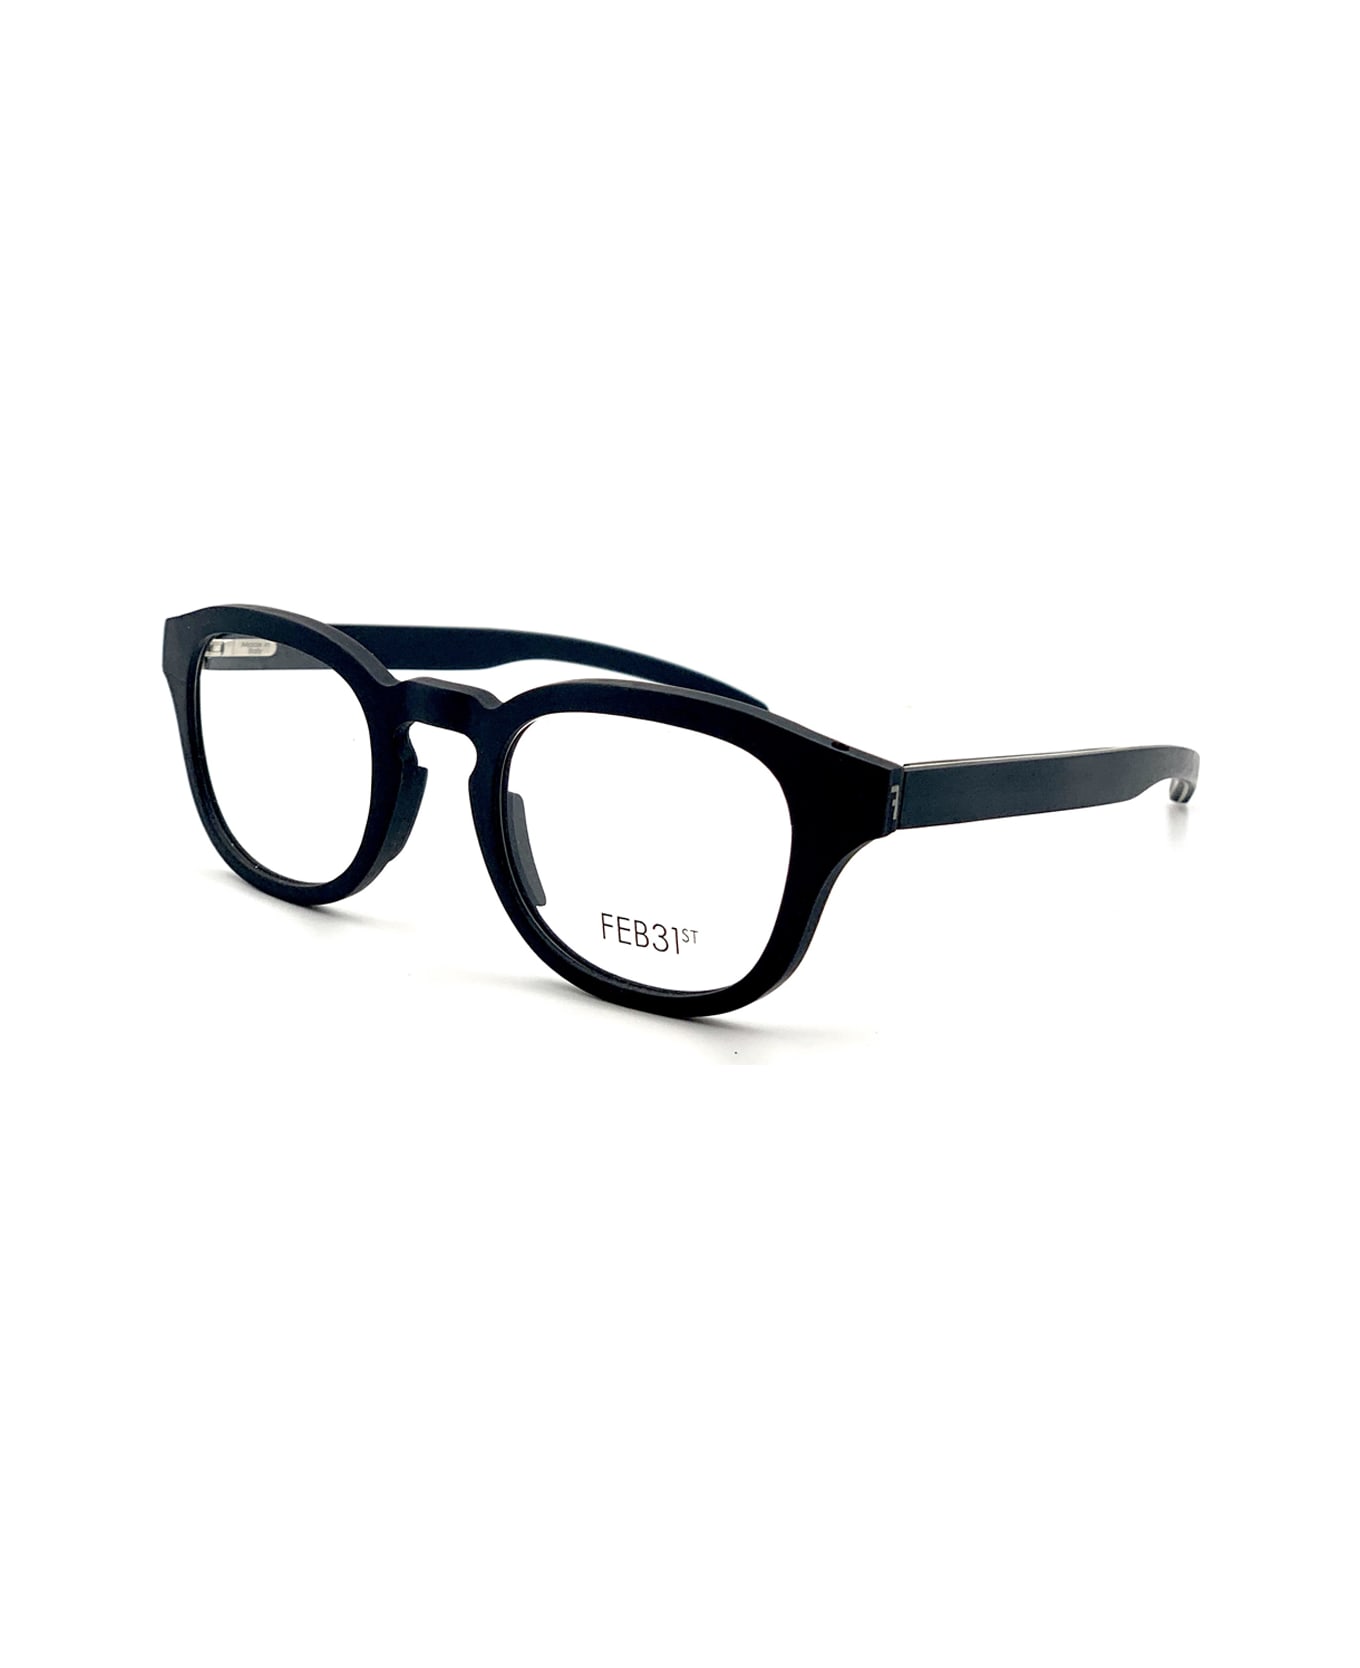 Feb31st Giano Black Glasses - Nero アイウェア